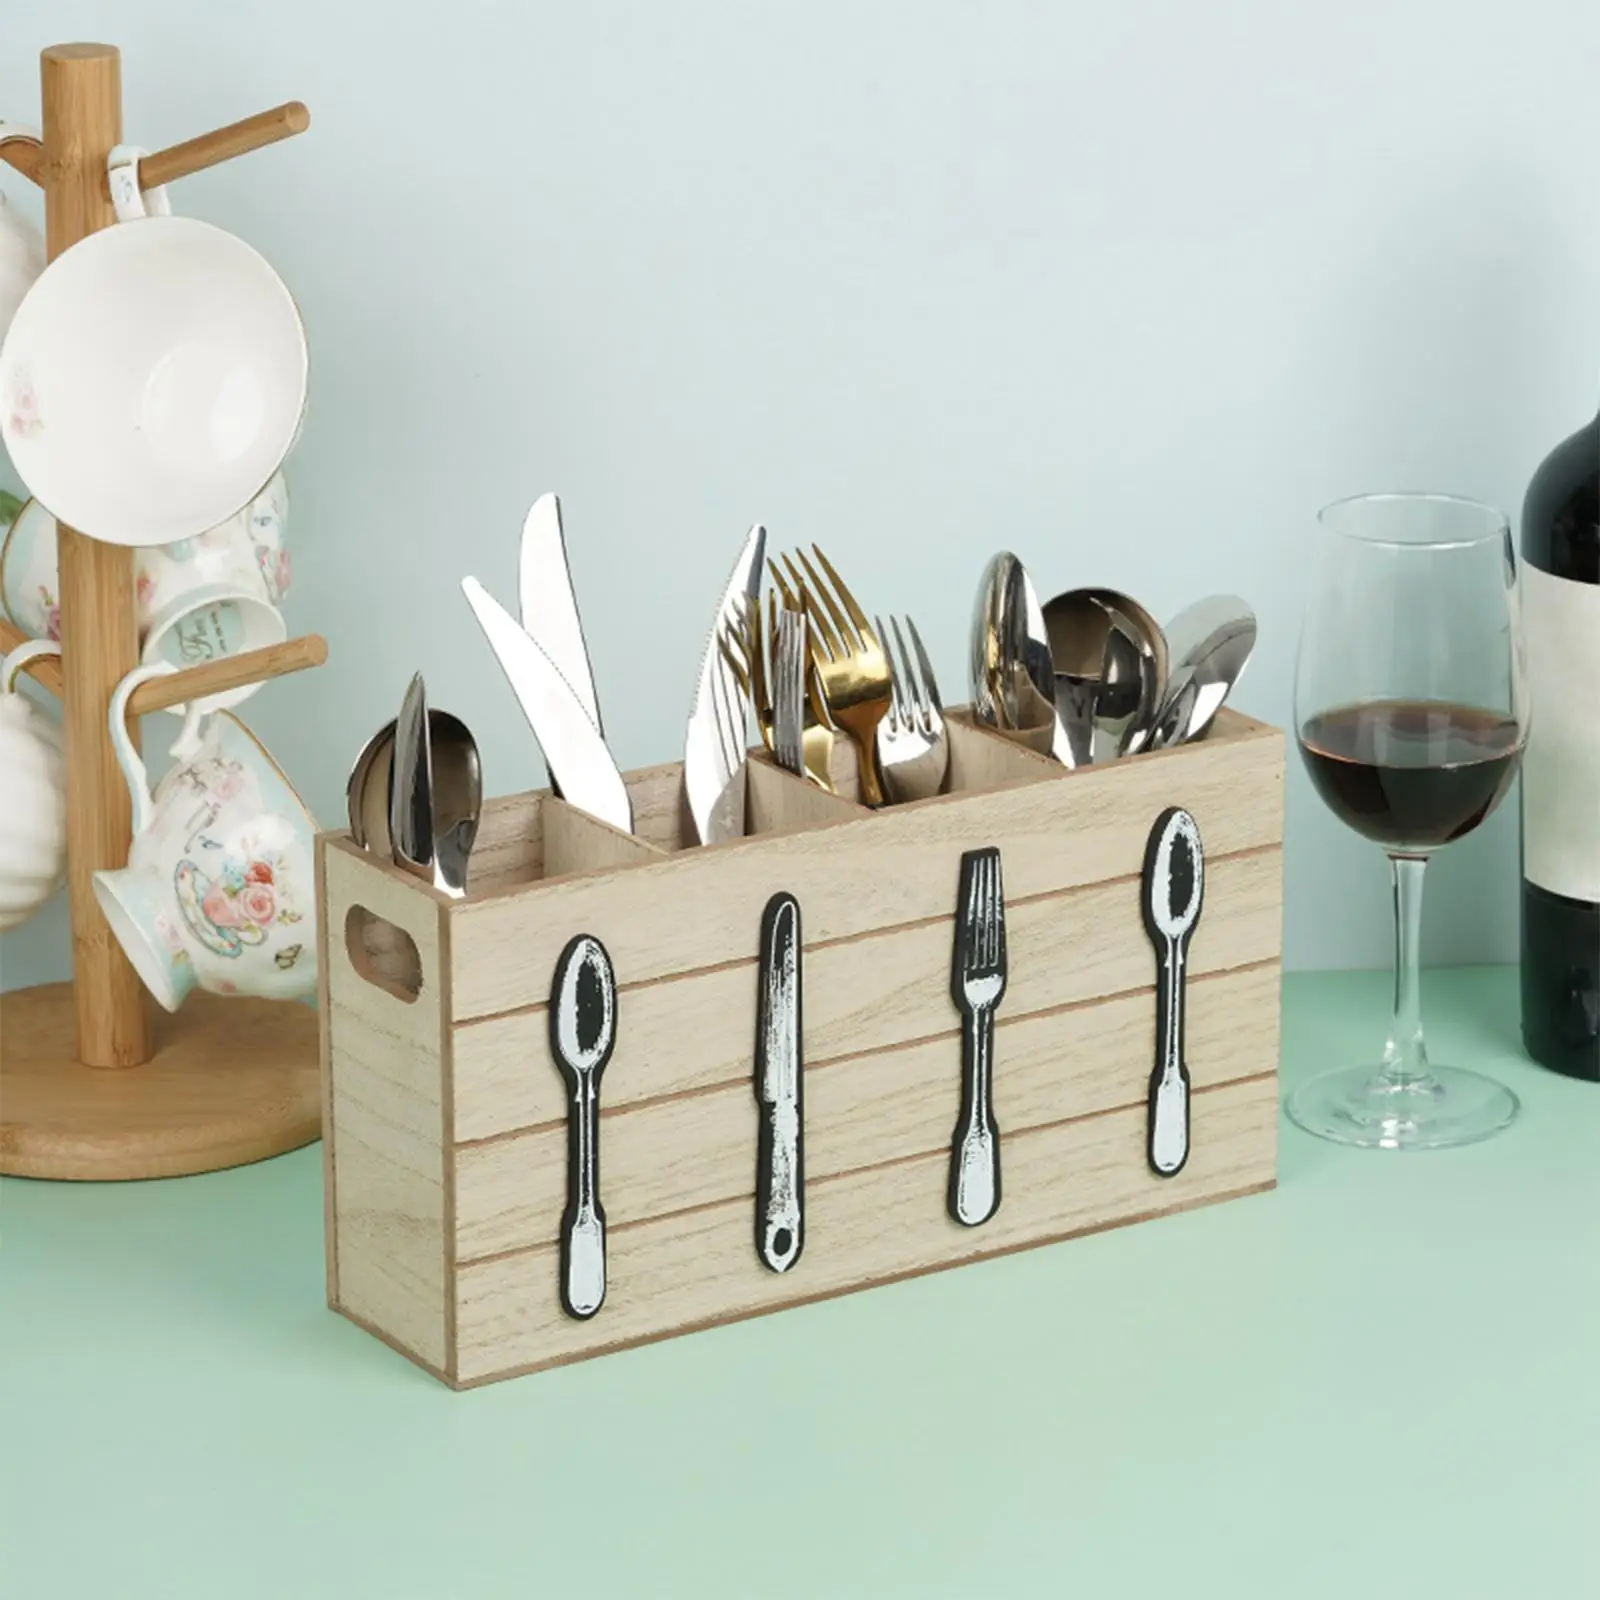 Retro Style Wooden Kitchen Cutlery Holder Multifunction Desktop Knife and Fork Storage Holder for Kitchen Decoration Daily Meals